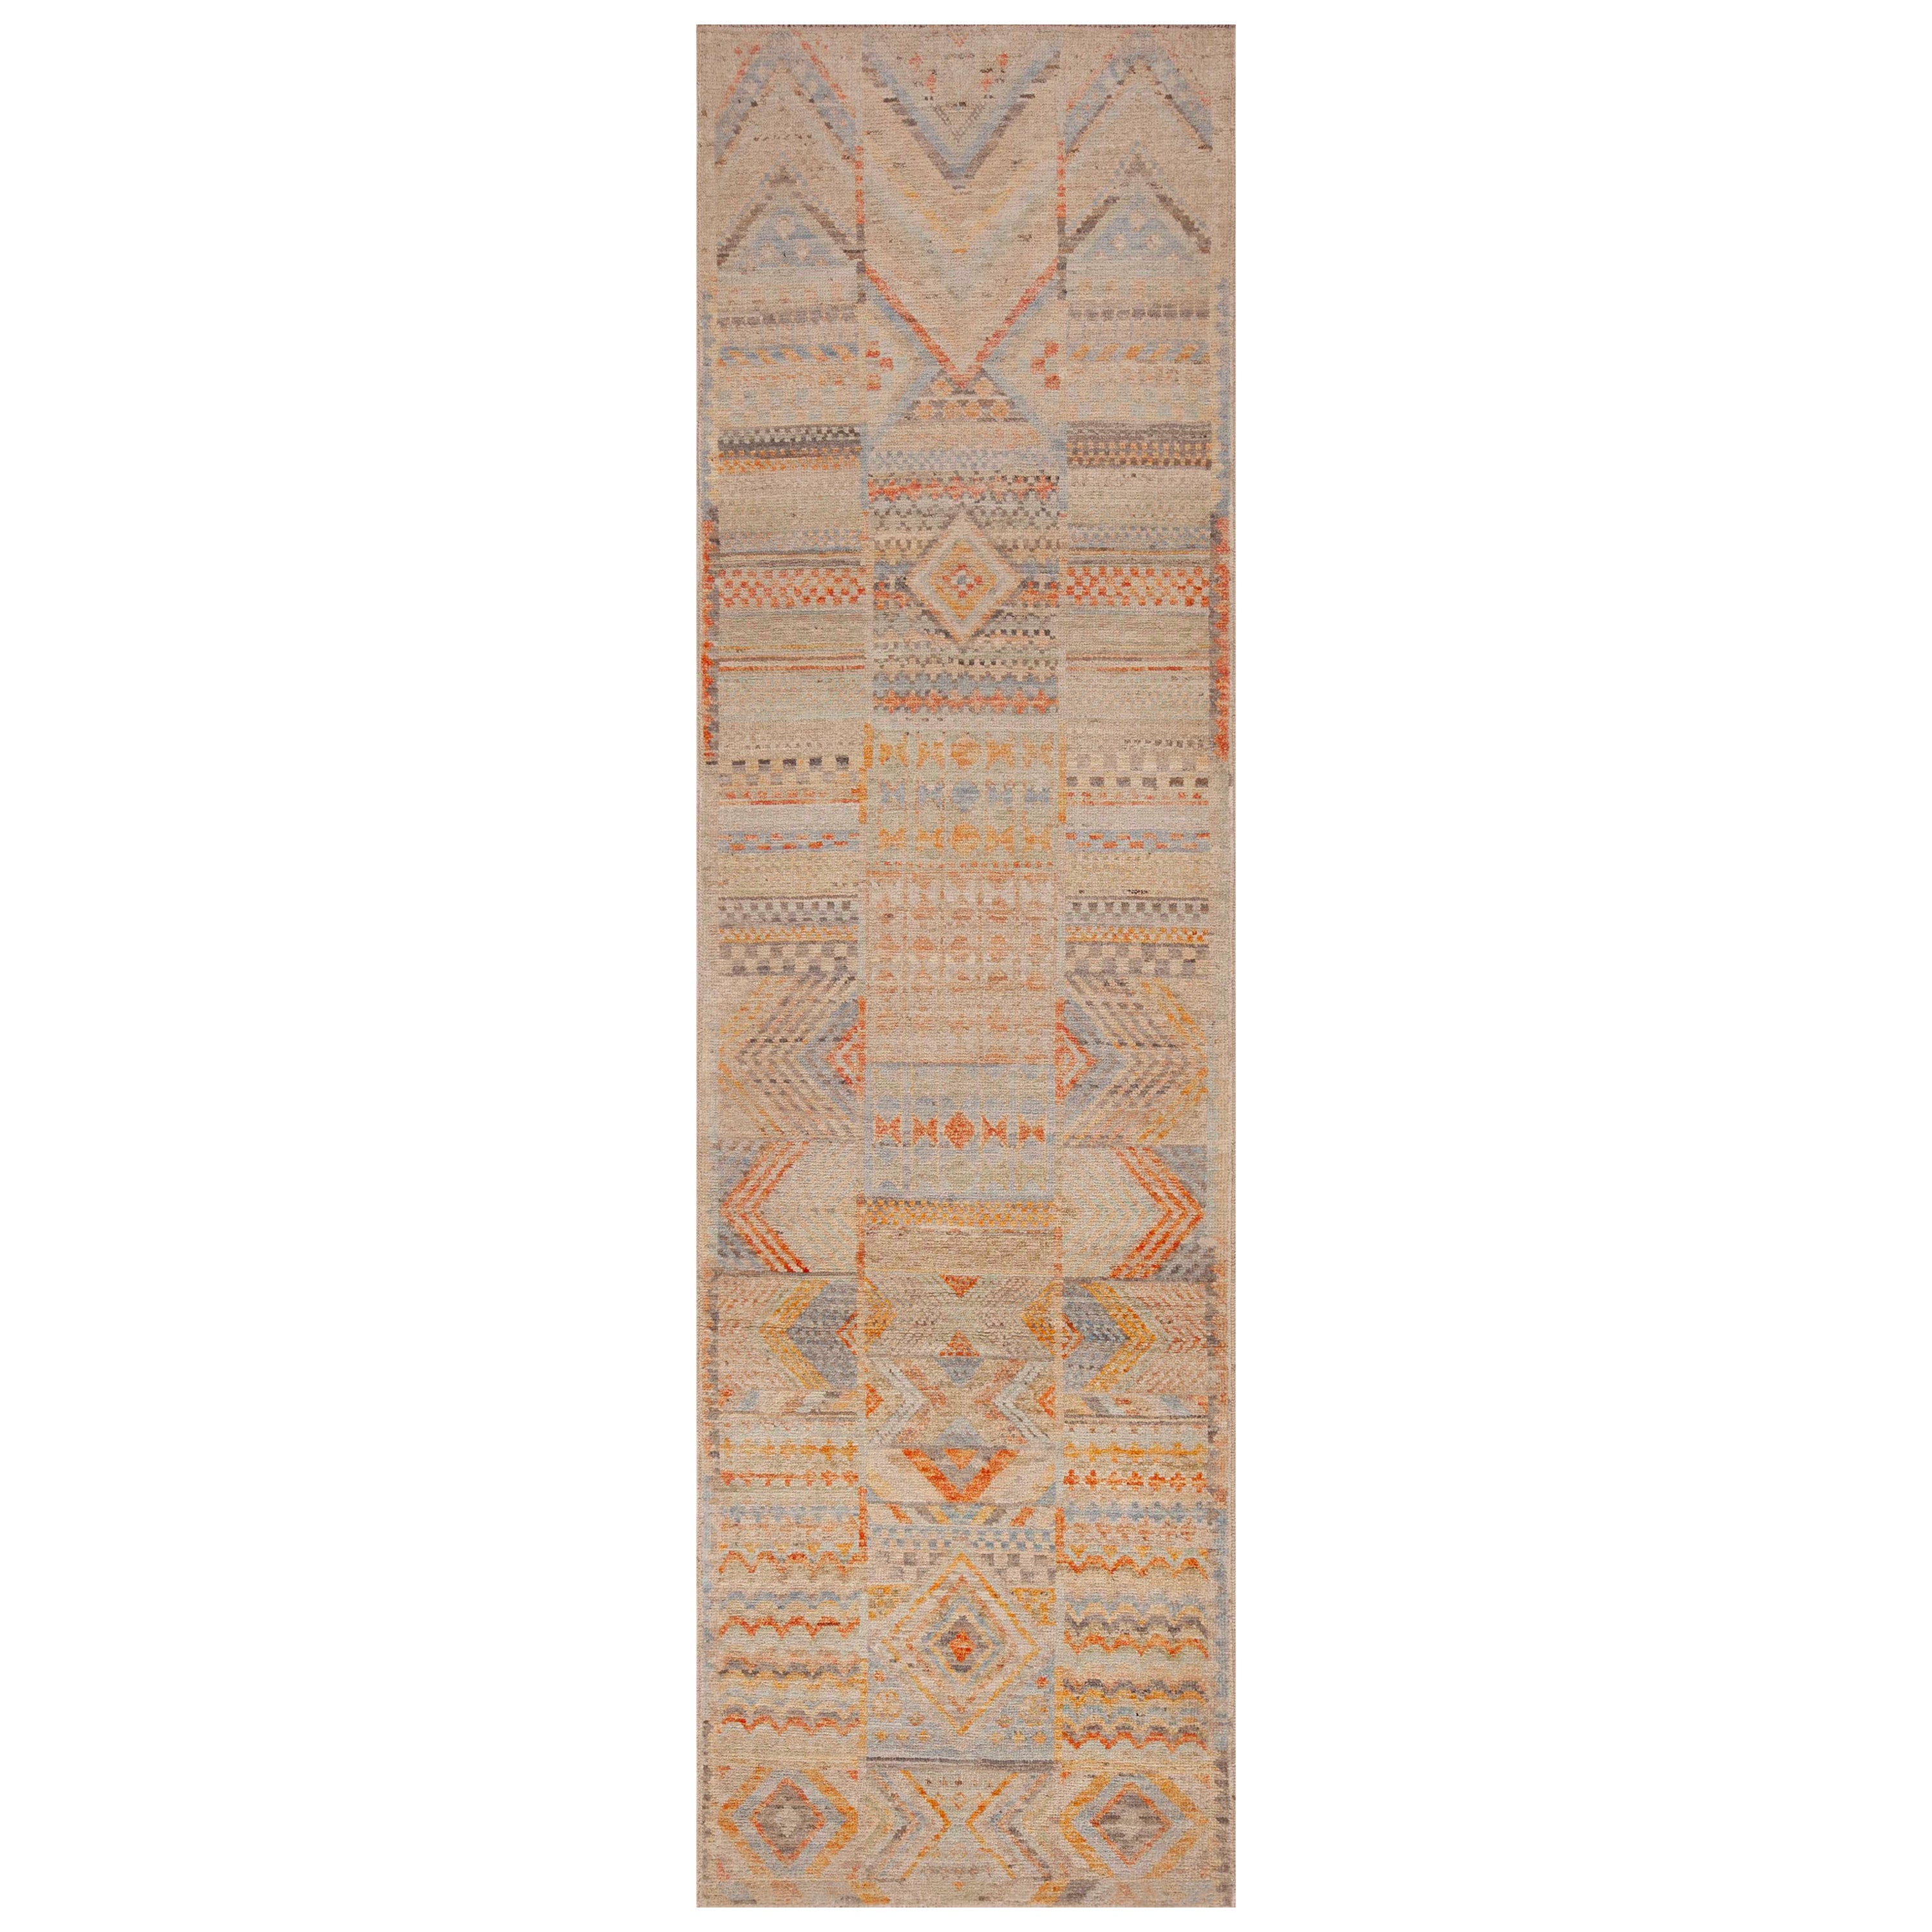 Nazmiyal CollectioN Tribal Geometric Modern Hallway Runner Rug 2'9" x 9'7" For Sale